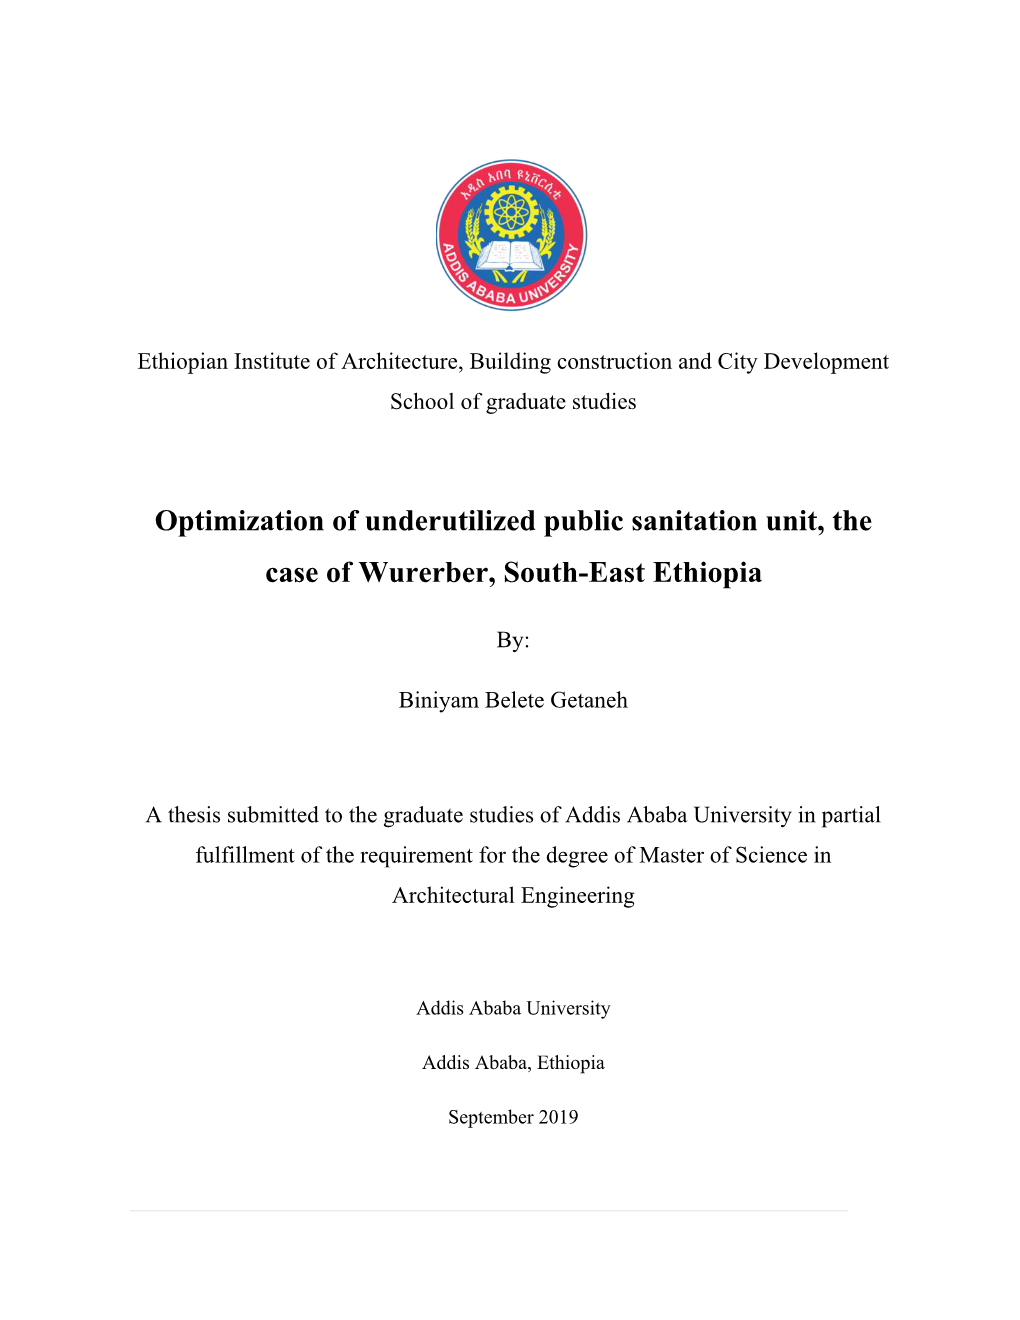 Optimization of Underutilized Public Sanitation Unit, the Case of Wurerber, South-East Ethiopia